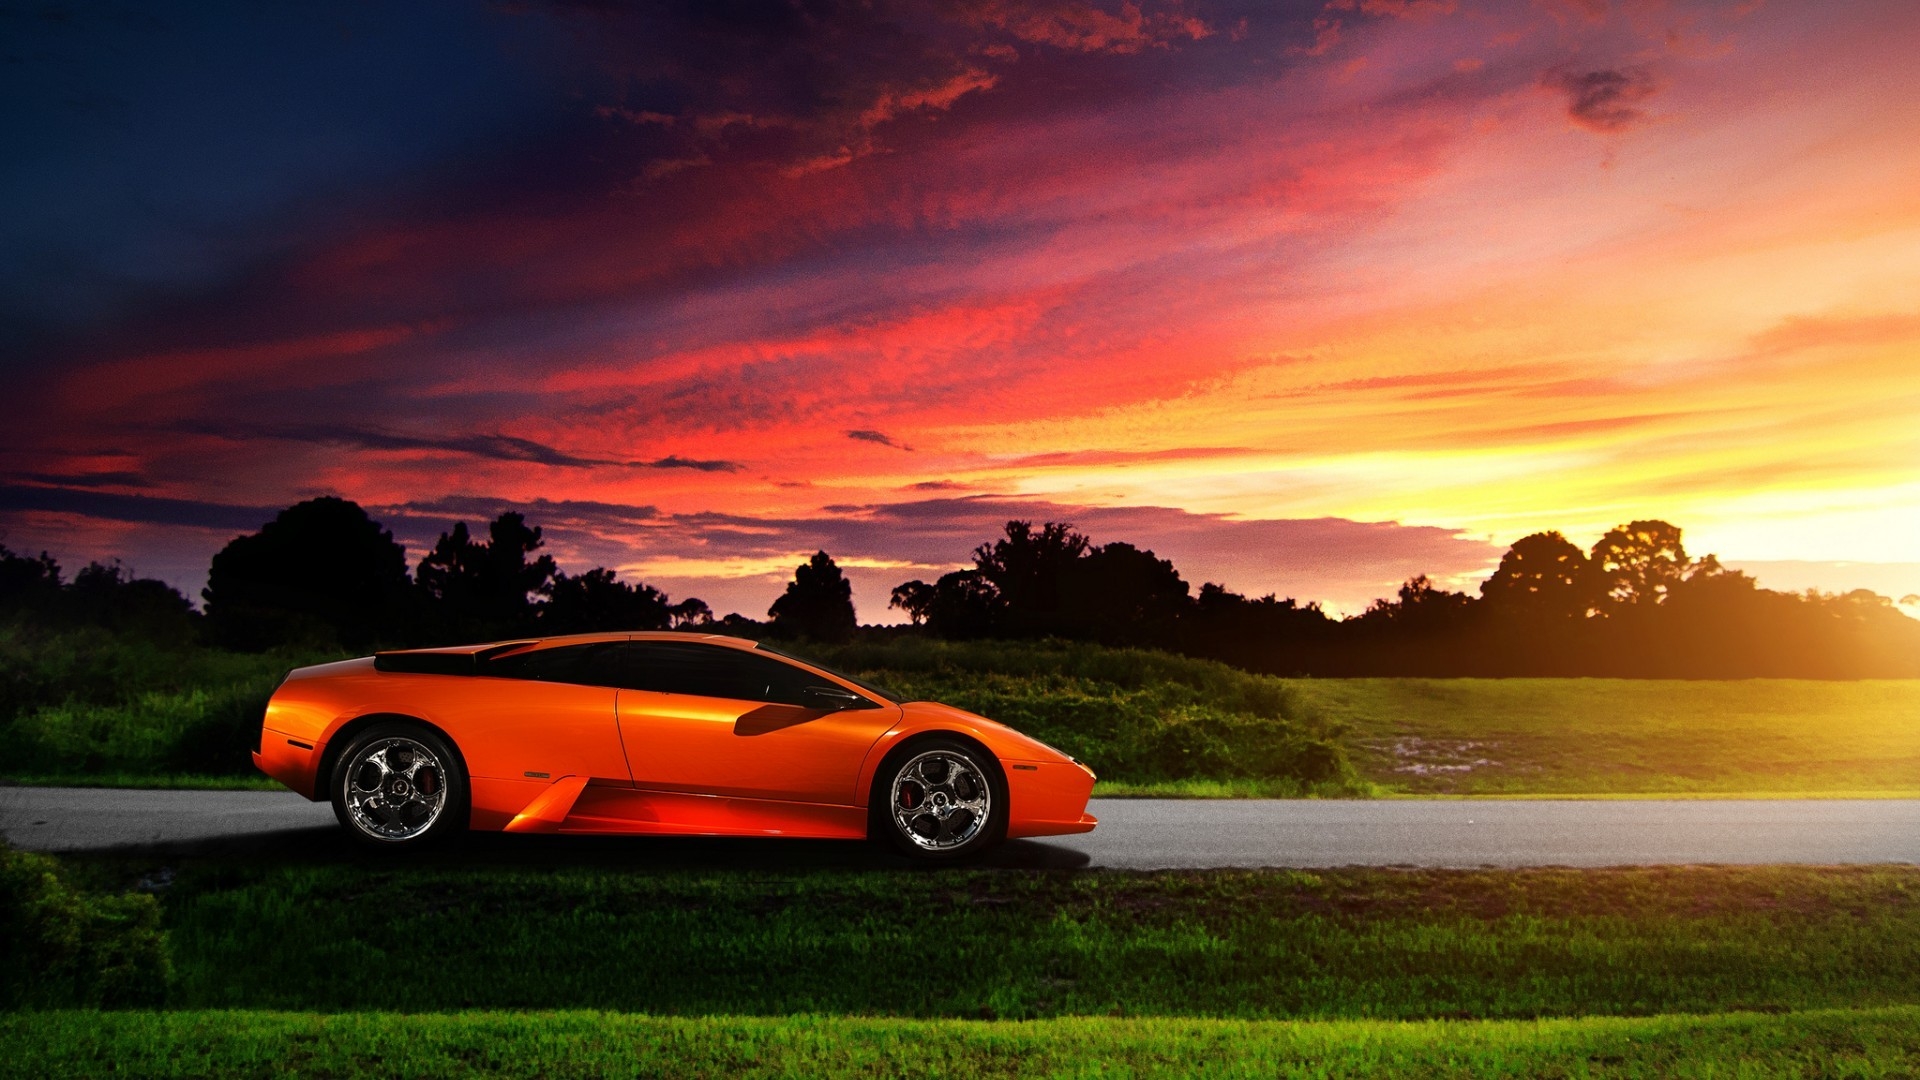 Lamborghini Murcielago Orange for 1920 x 1080 HDTV 1080p resolution